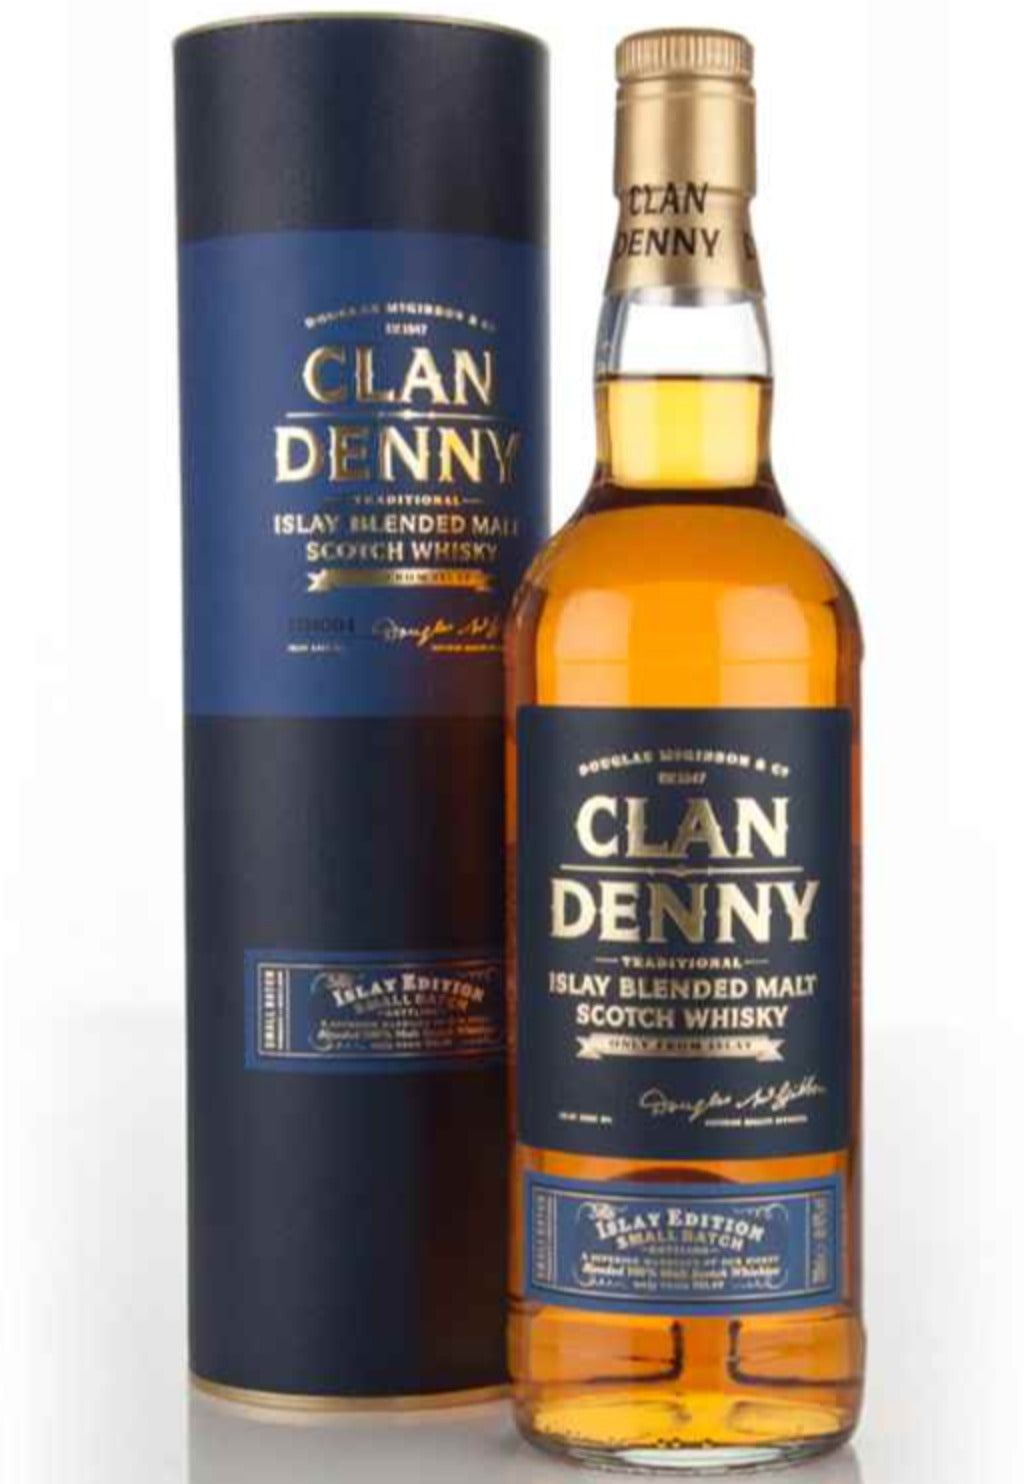 Clan Denny Islay Blended Malt Scotch Whisky